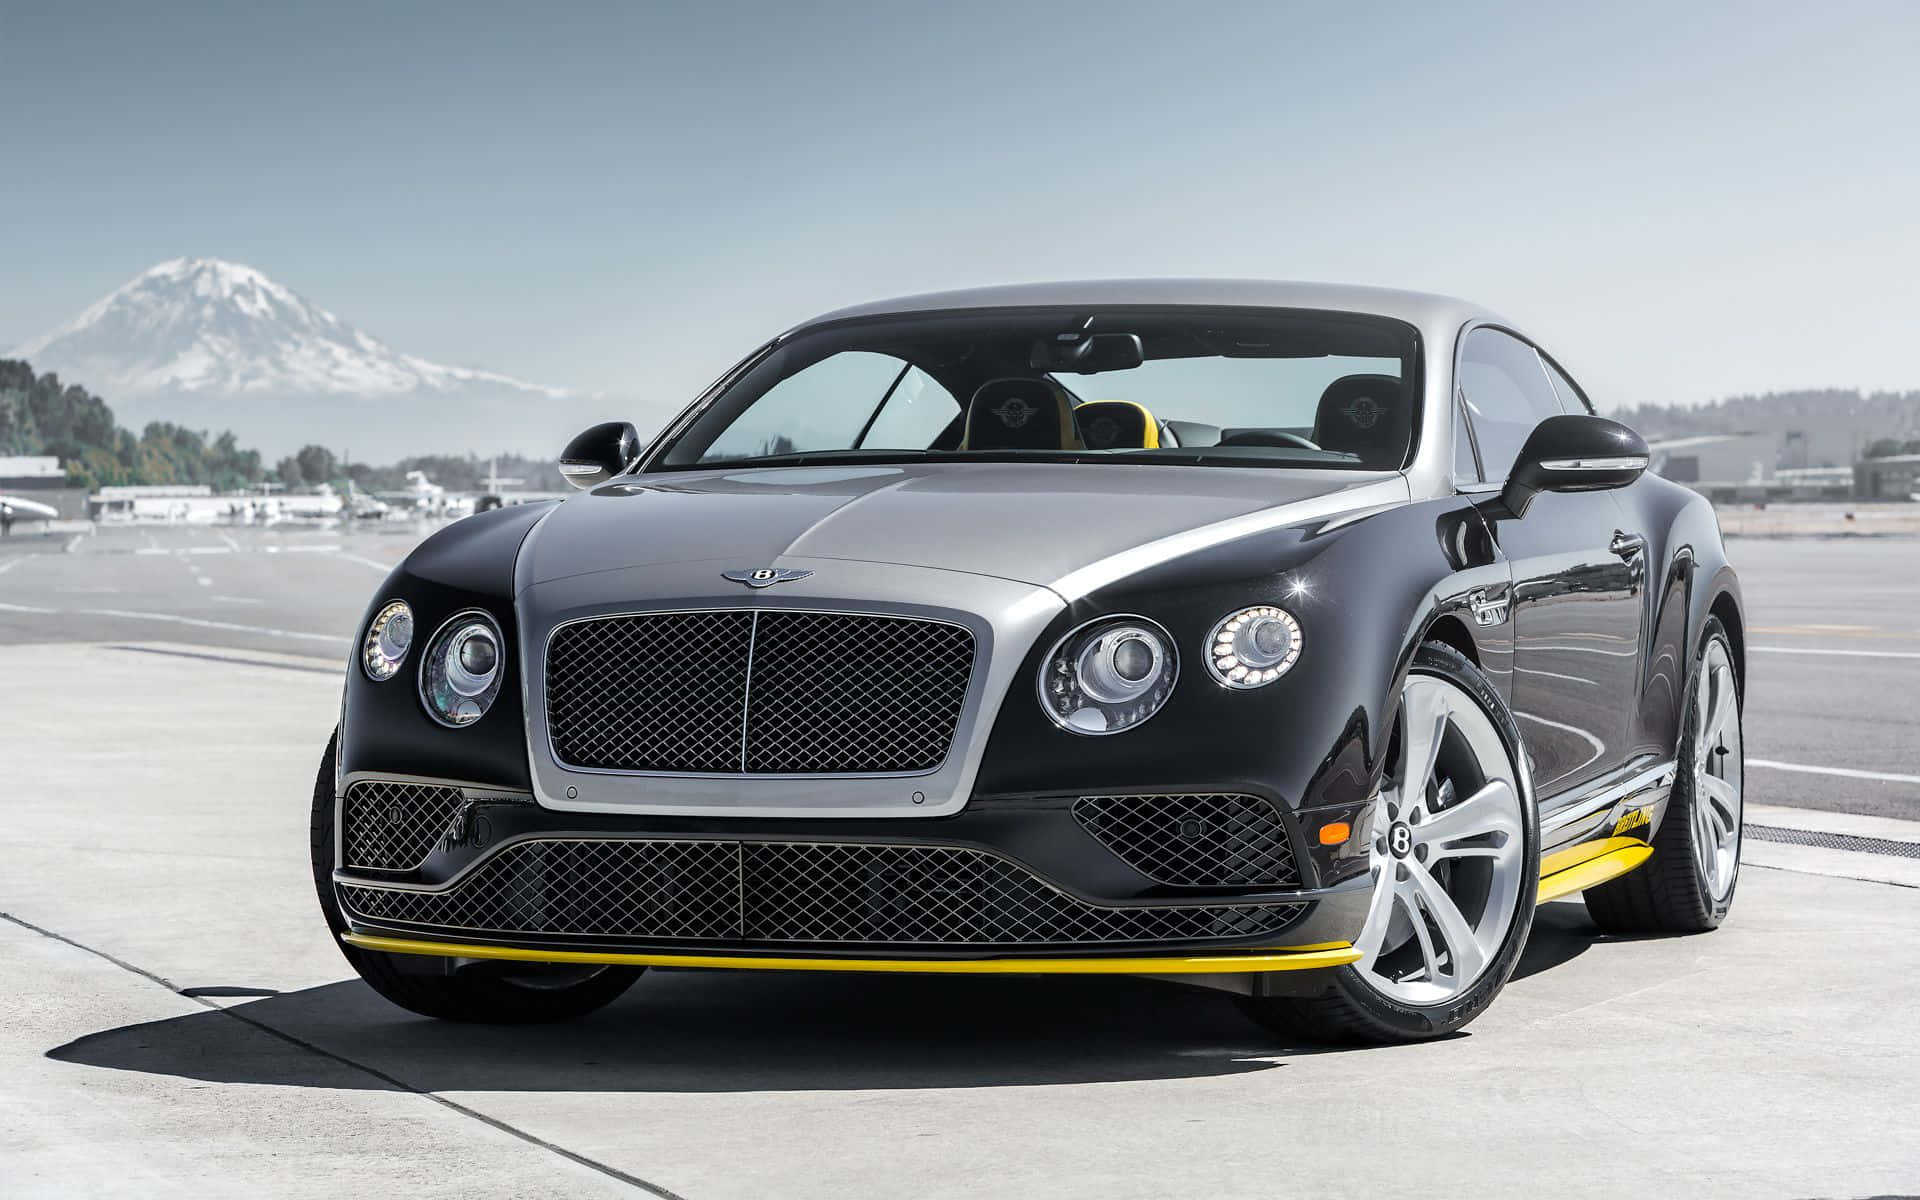 Enjoy the Exquisite Luxury of a Bentley Vehicle